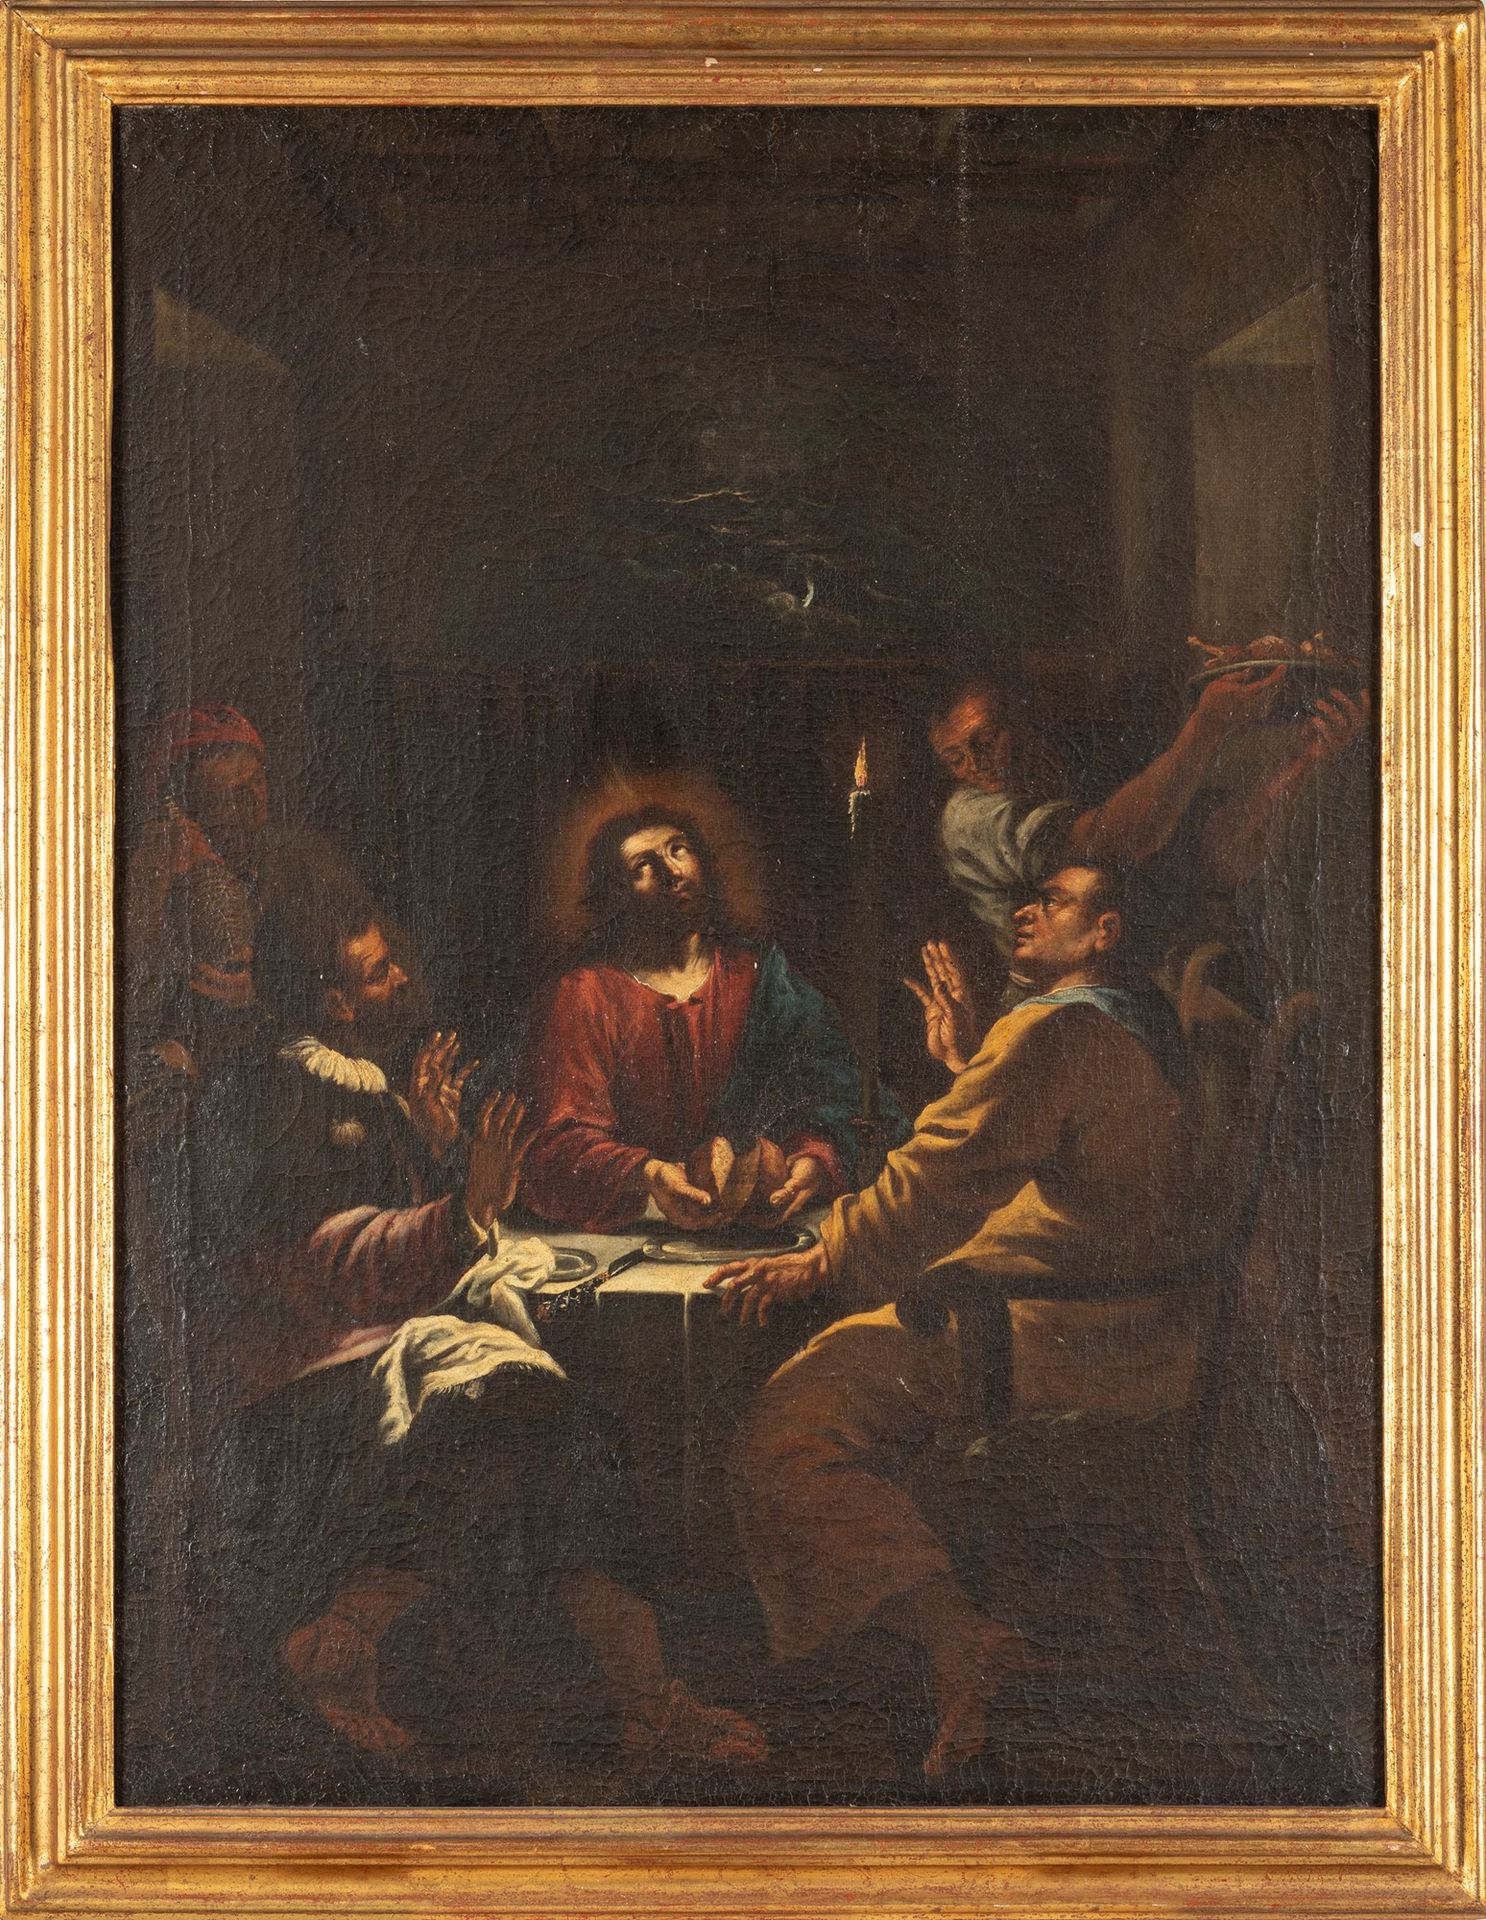 Scuola veneta, secolo XVII 以马忤斯的晚餐

布面油画
95.5 x 71 cm